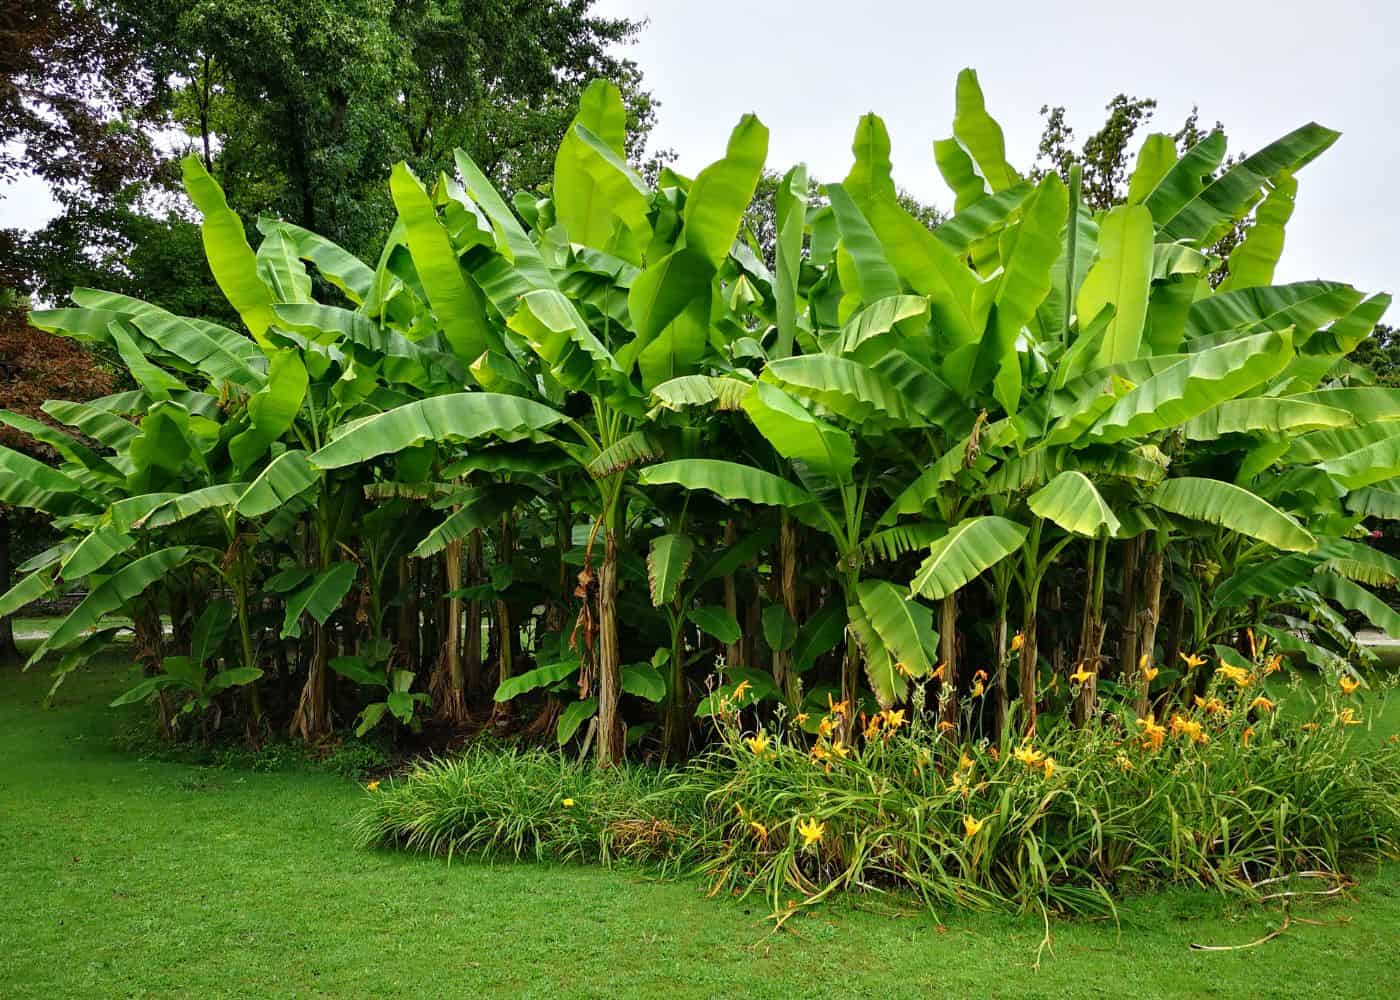 Banana plants in the garden